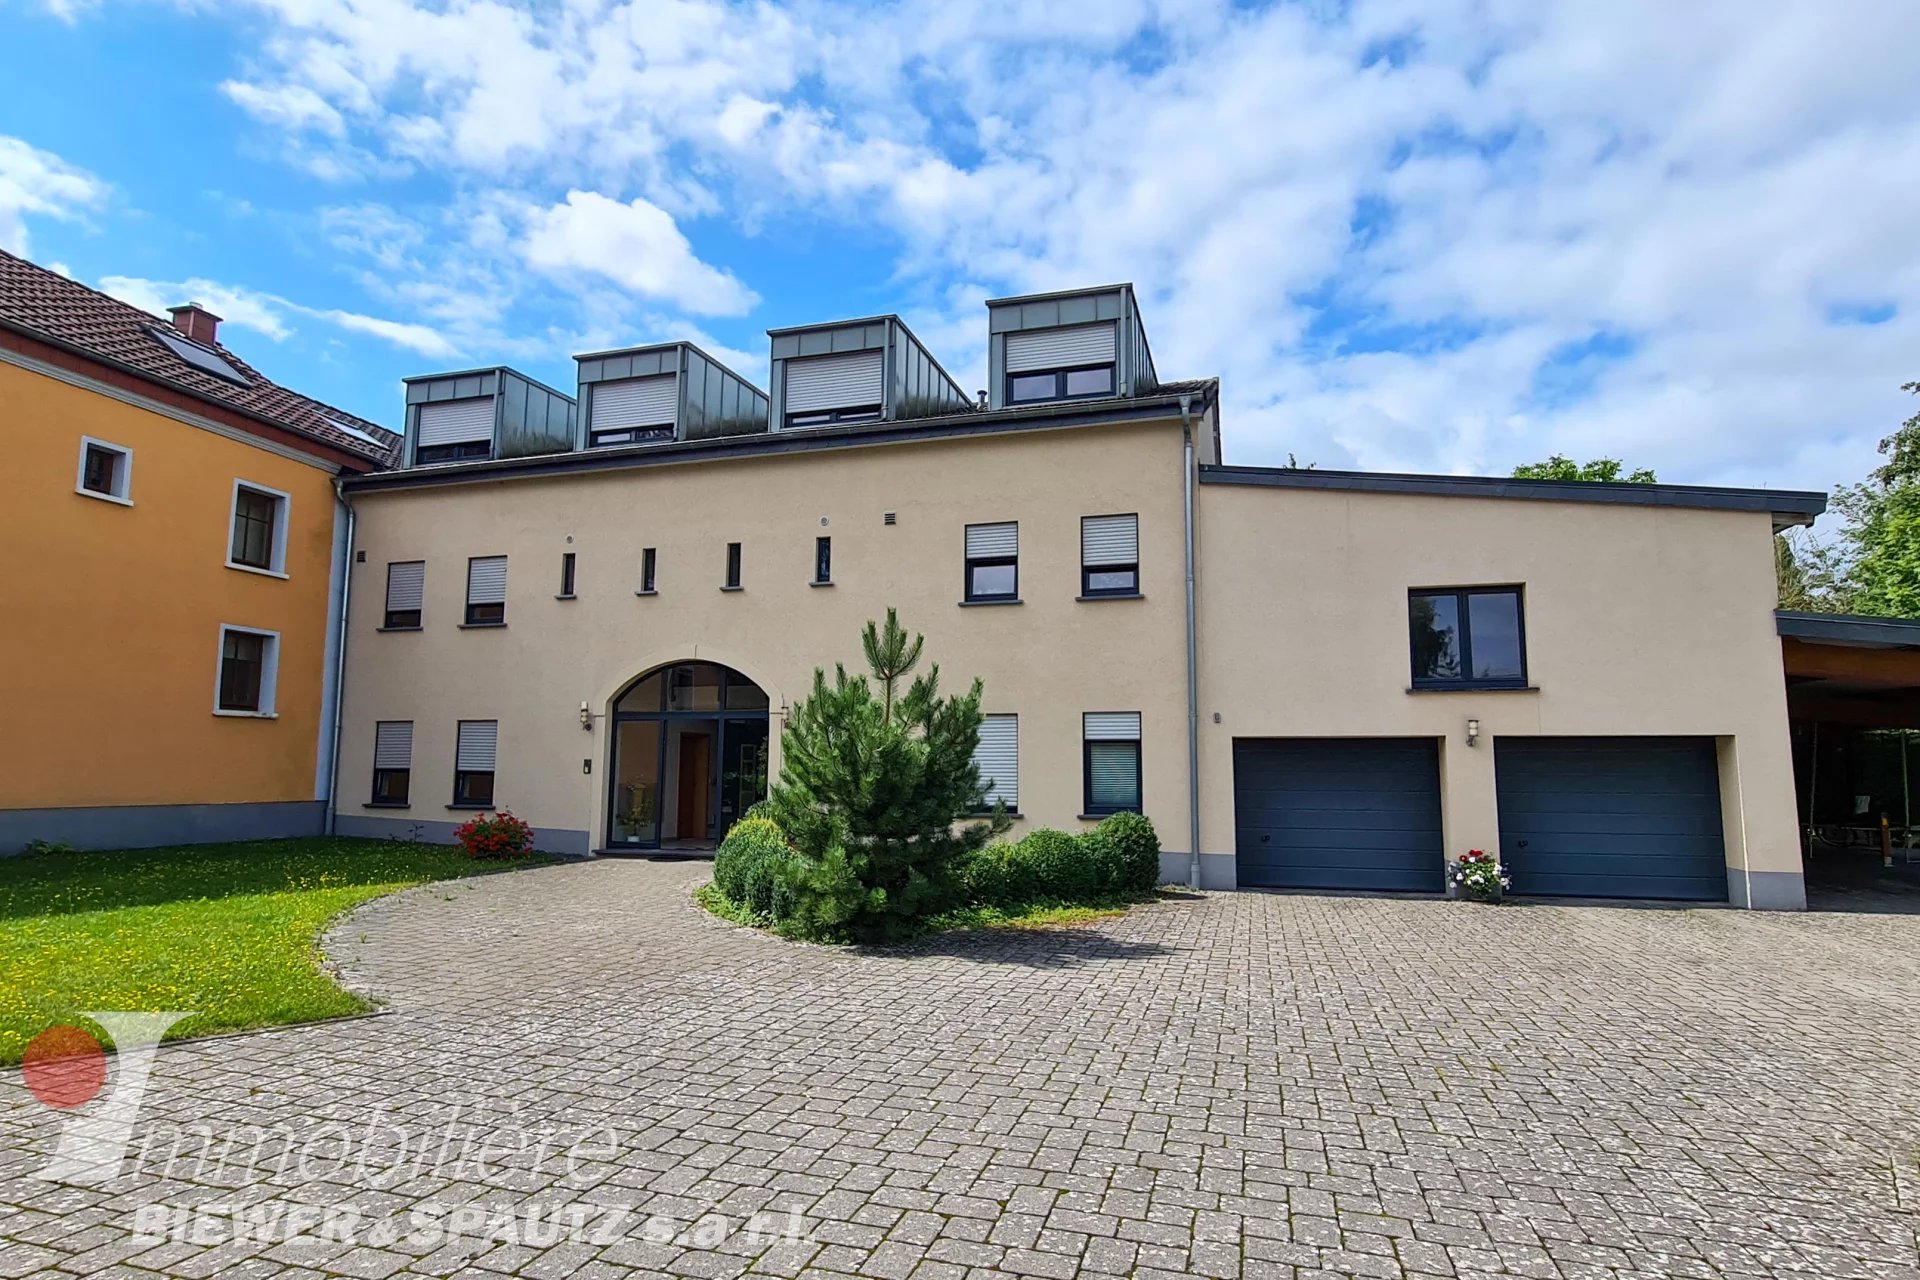 RESERVED - duplex apartment with 3 bedrooms in Oberanven